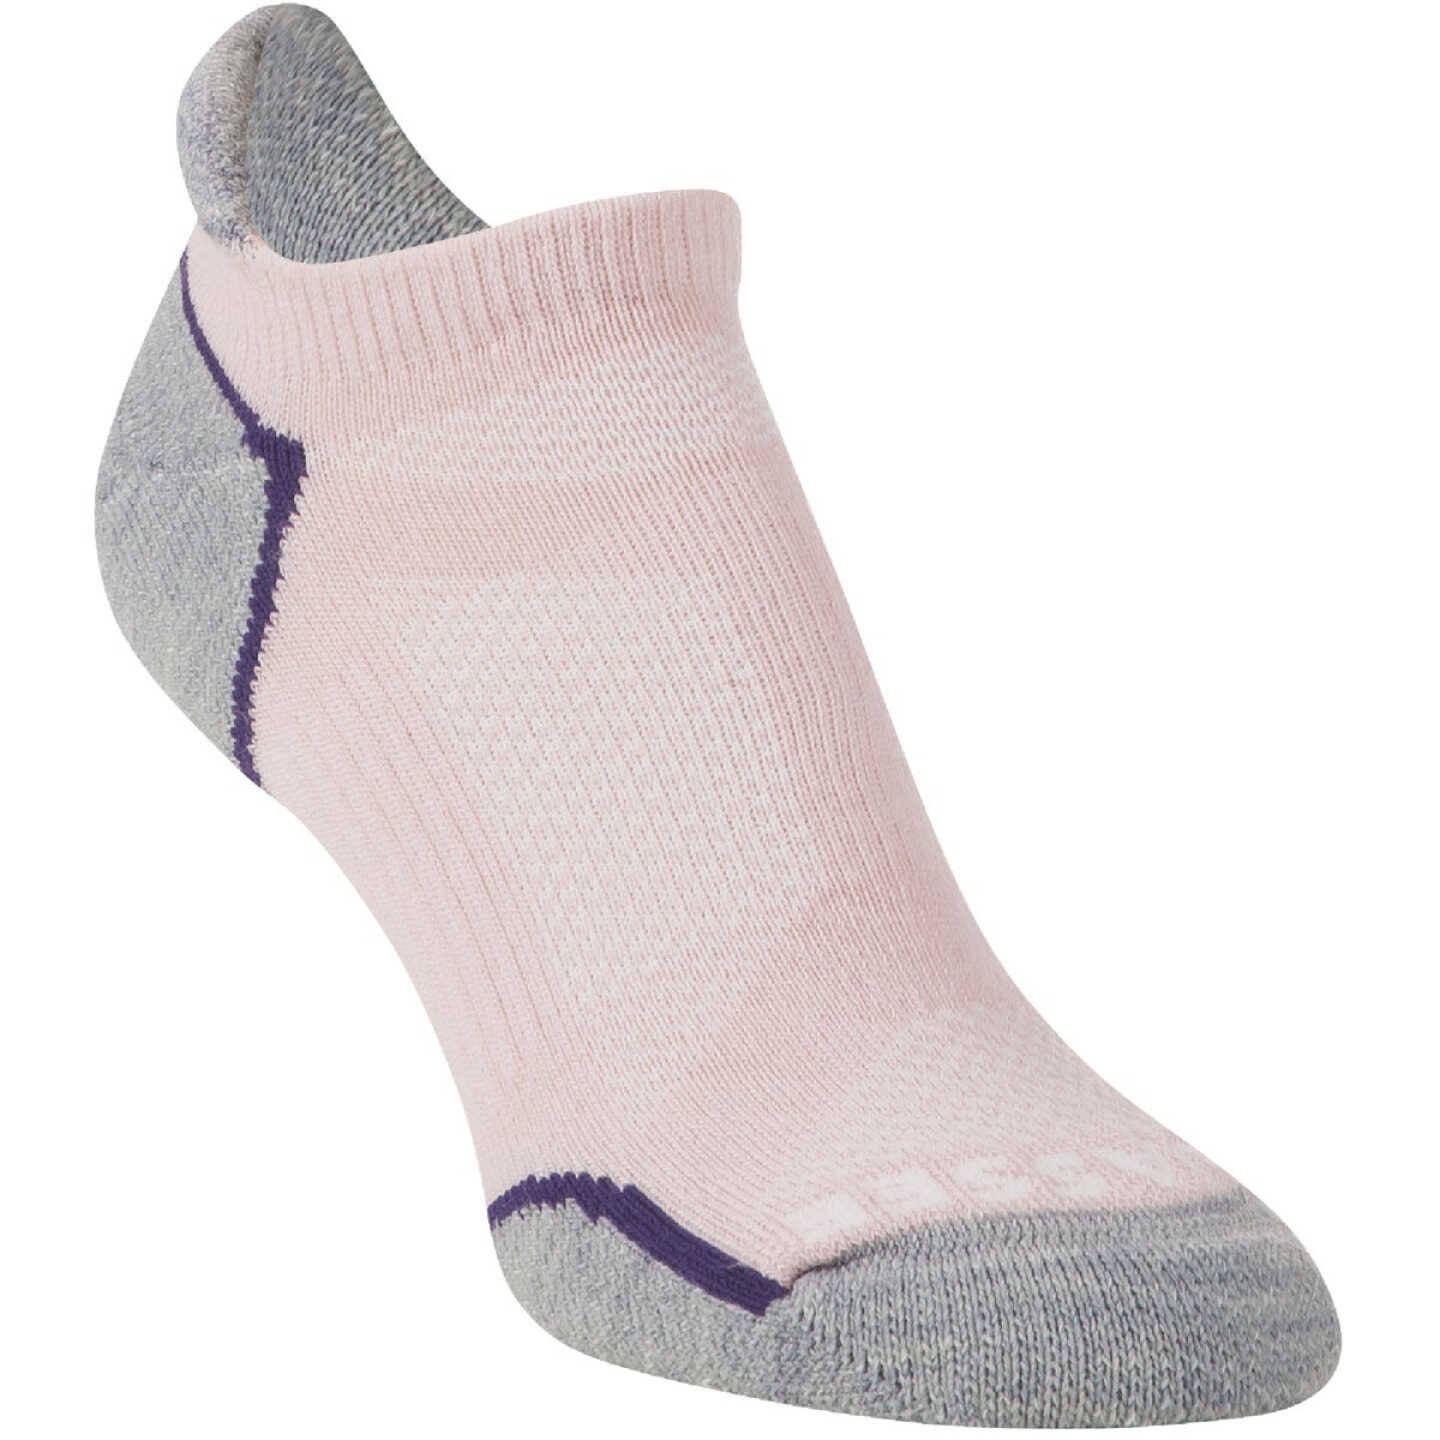 Hiwassee Trading Company Medium Pink Lightweight Running No Show Sock